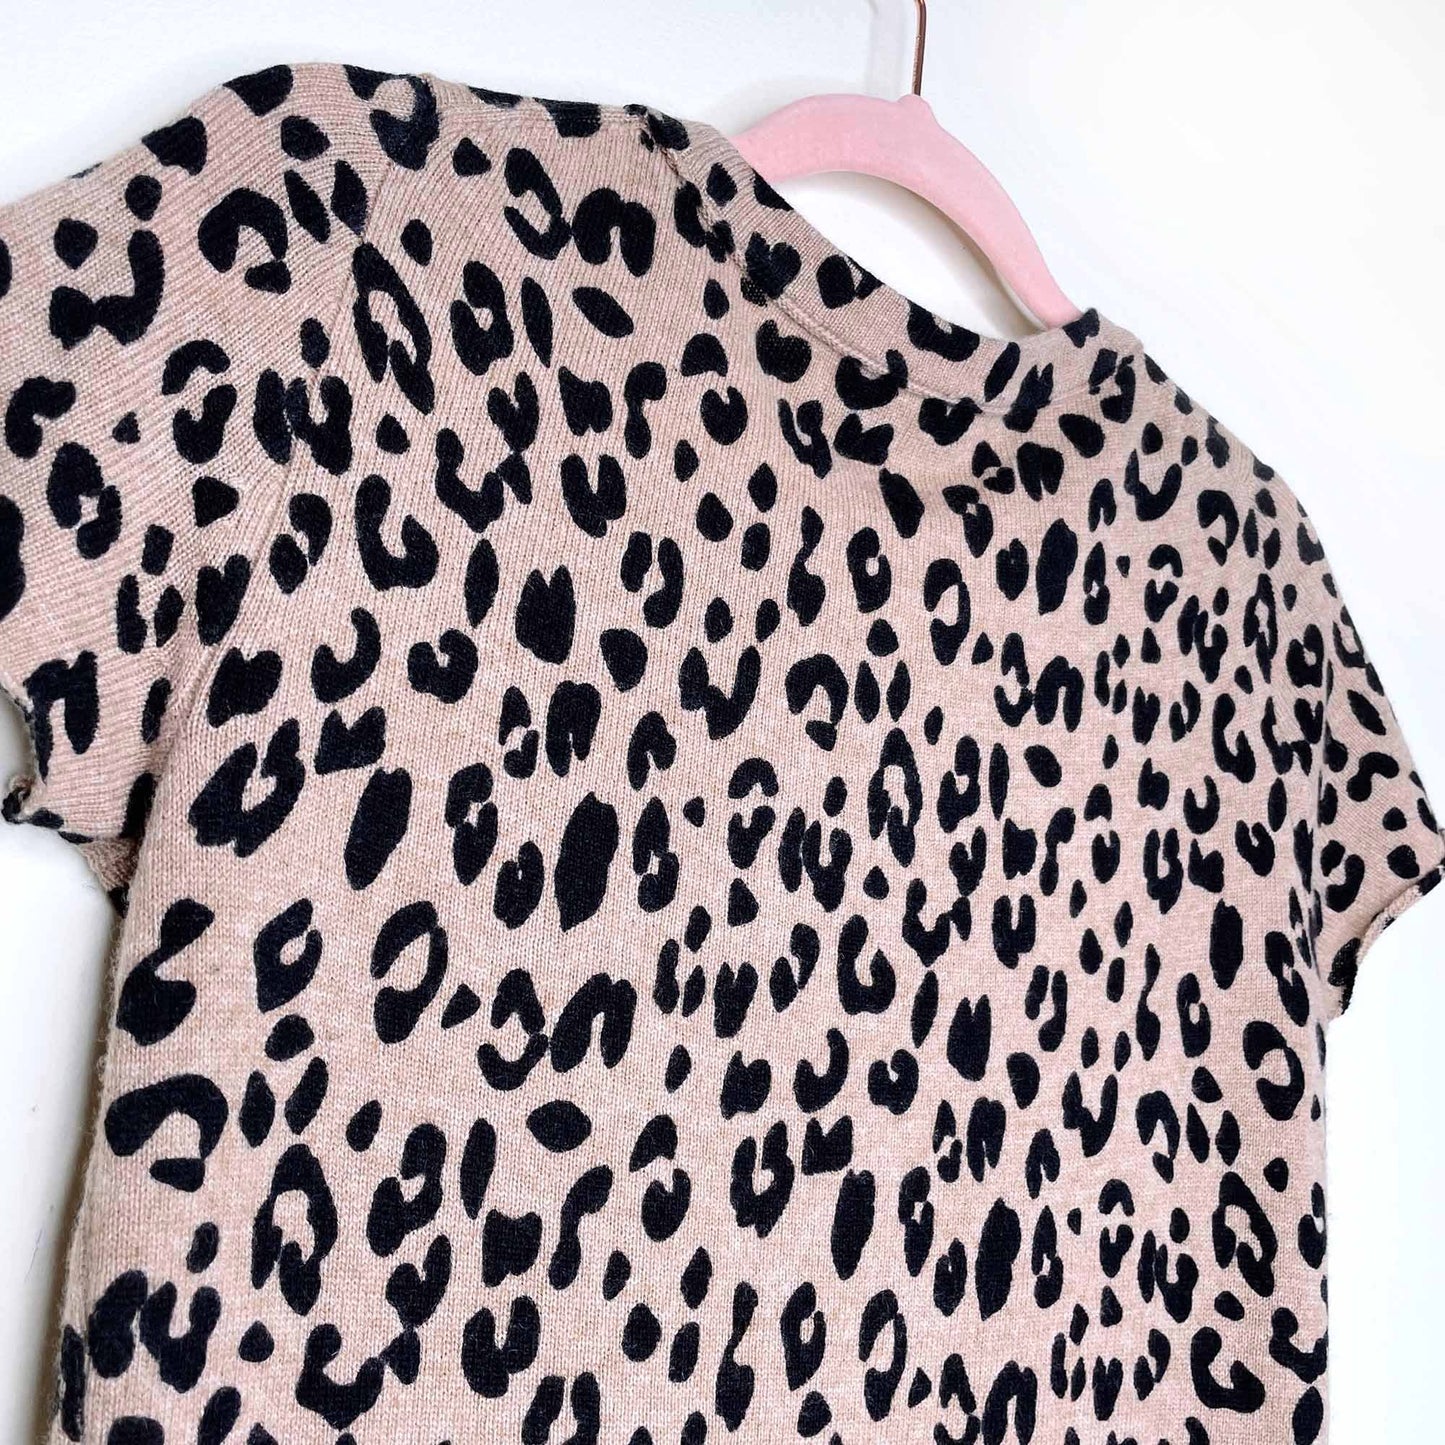 j crew leopard print cashmere sweater tee - size xs